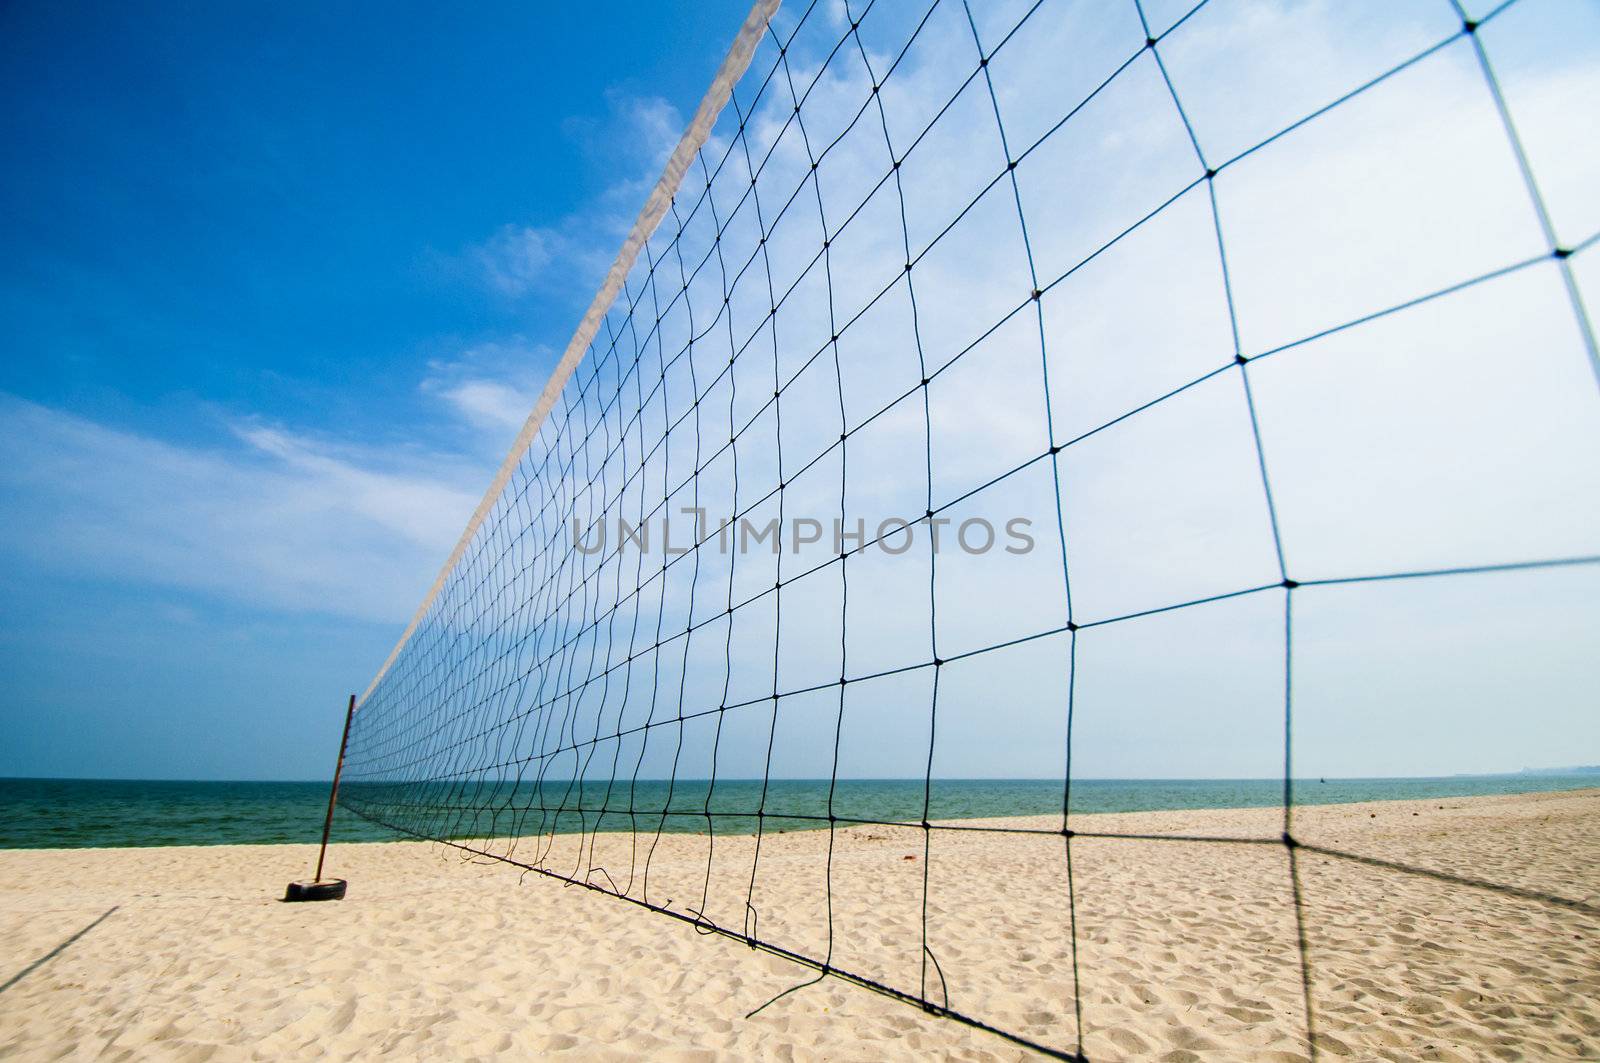 Torn beach volleyball net at tropical beach